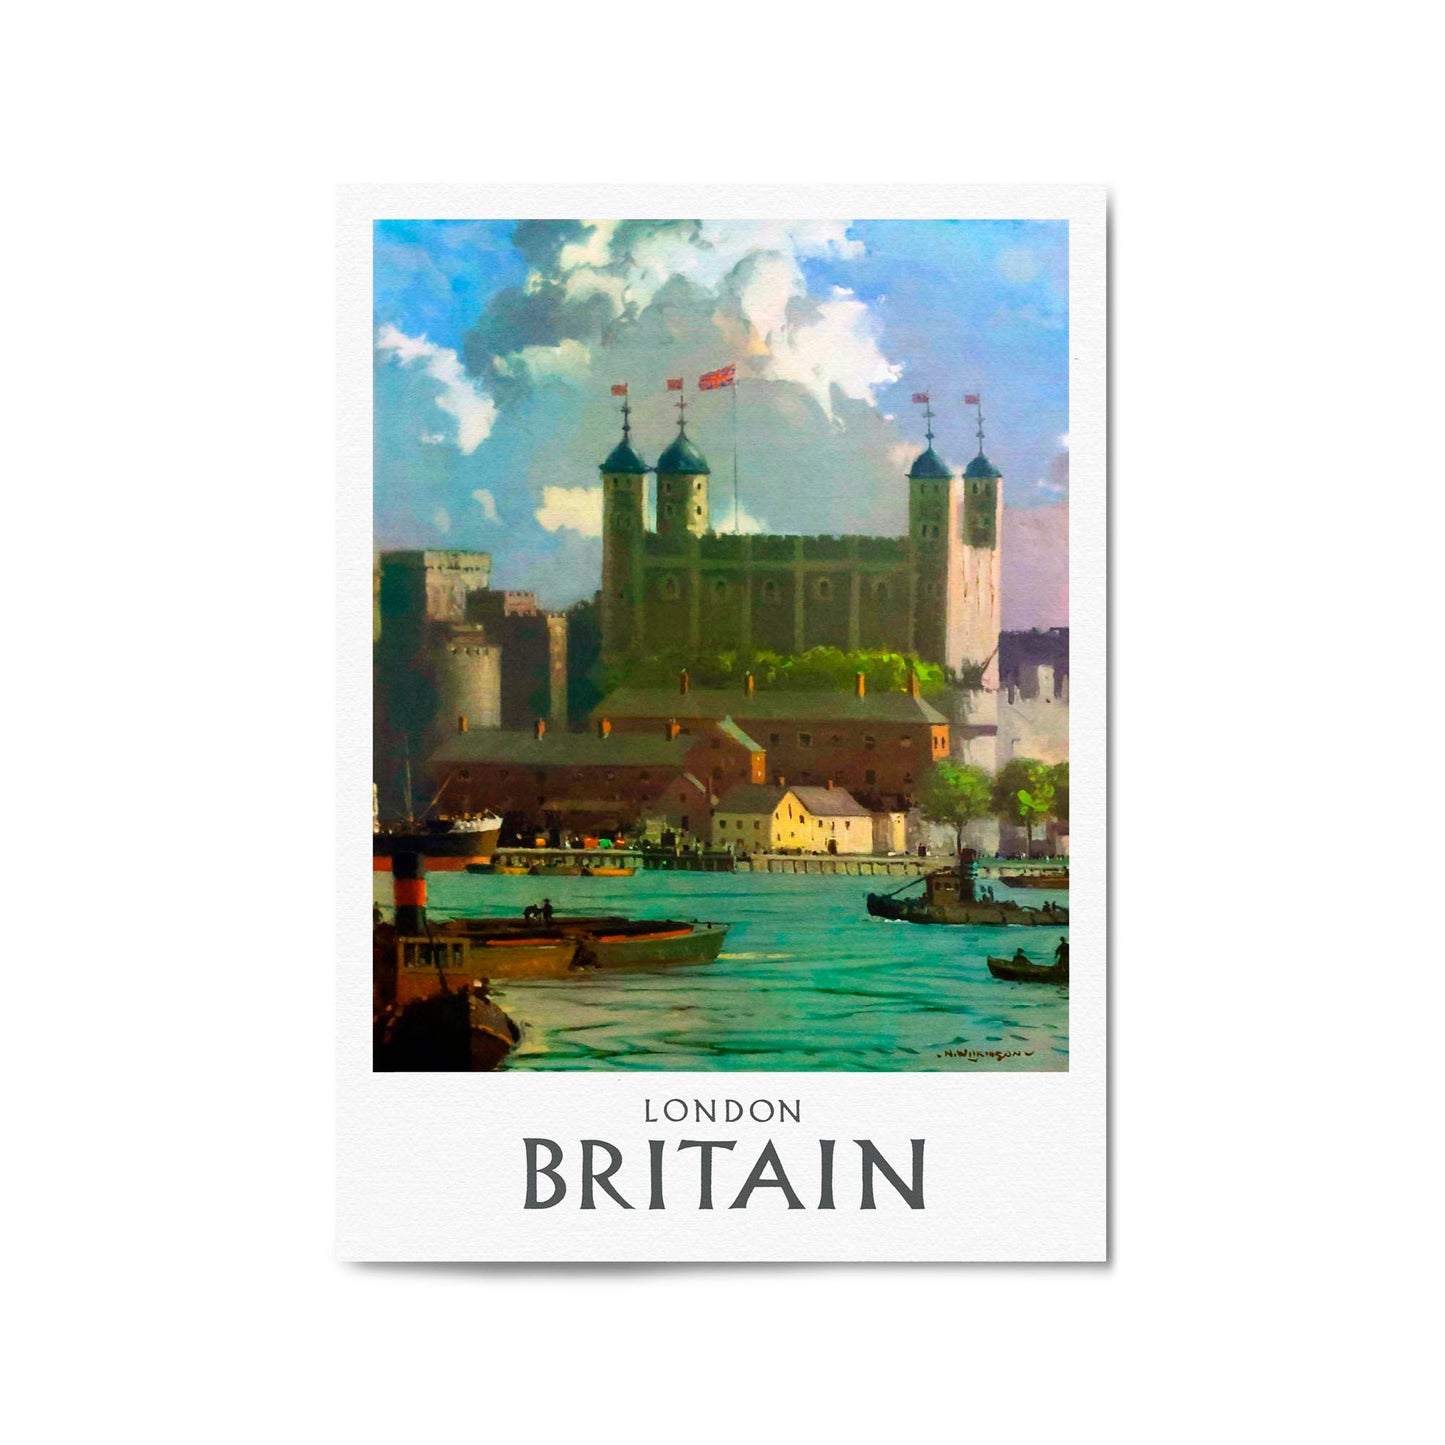 Tower of London, Britain | Framed Vintage Travel Poster